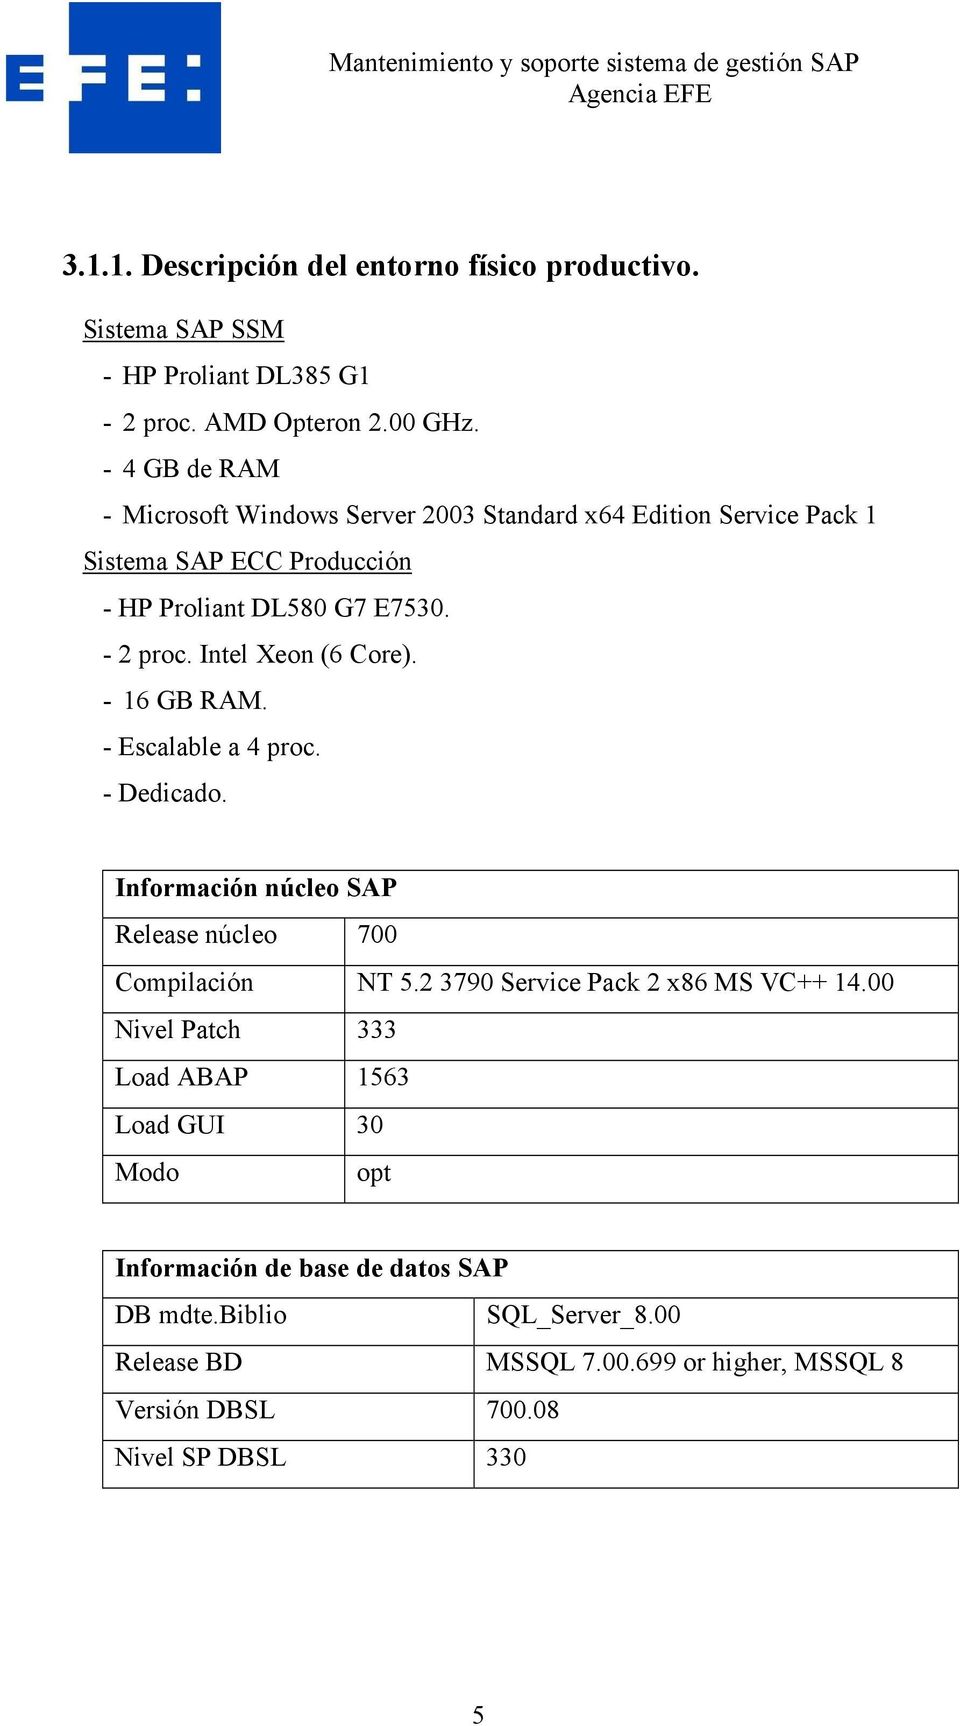 Intel Xeon (6 Core). - 16 GB RAM. - Escalable a 4 proc. - Dedicado. Información núcleo SAP Release núcleo 700 Compilación NT 5.